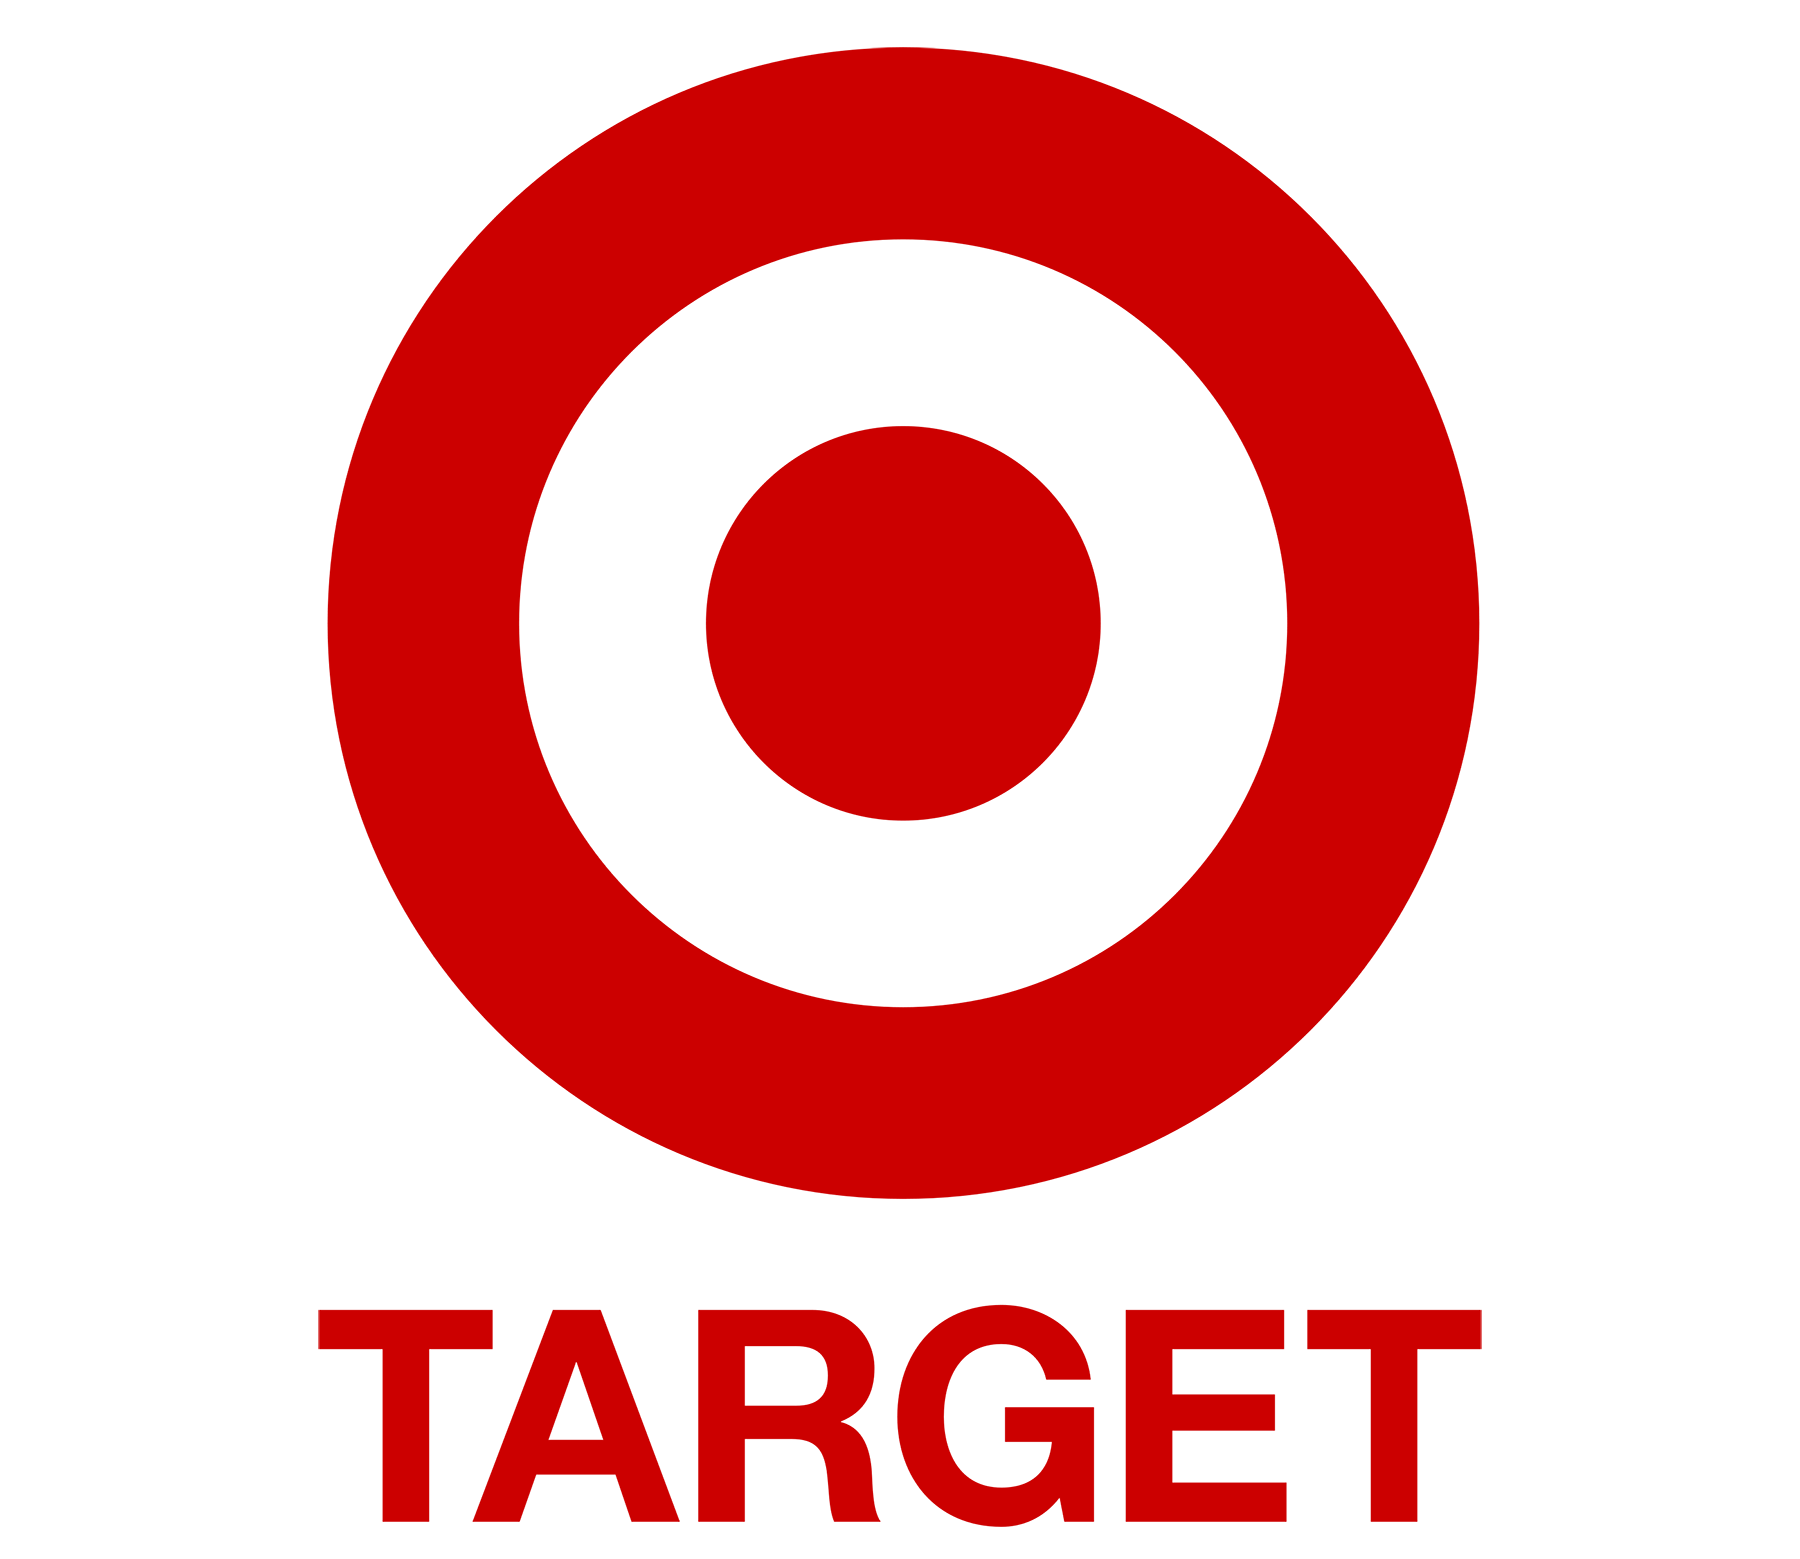 BOGO 15% Video Game GC - Target - 10/20 Only